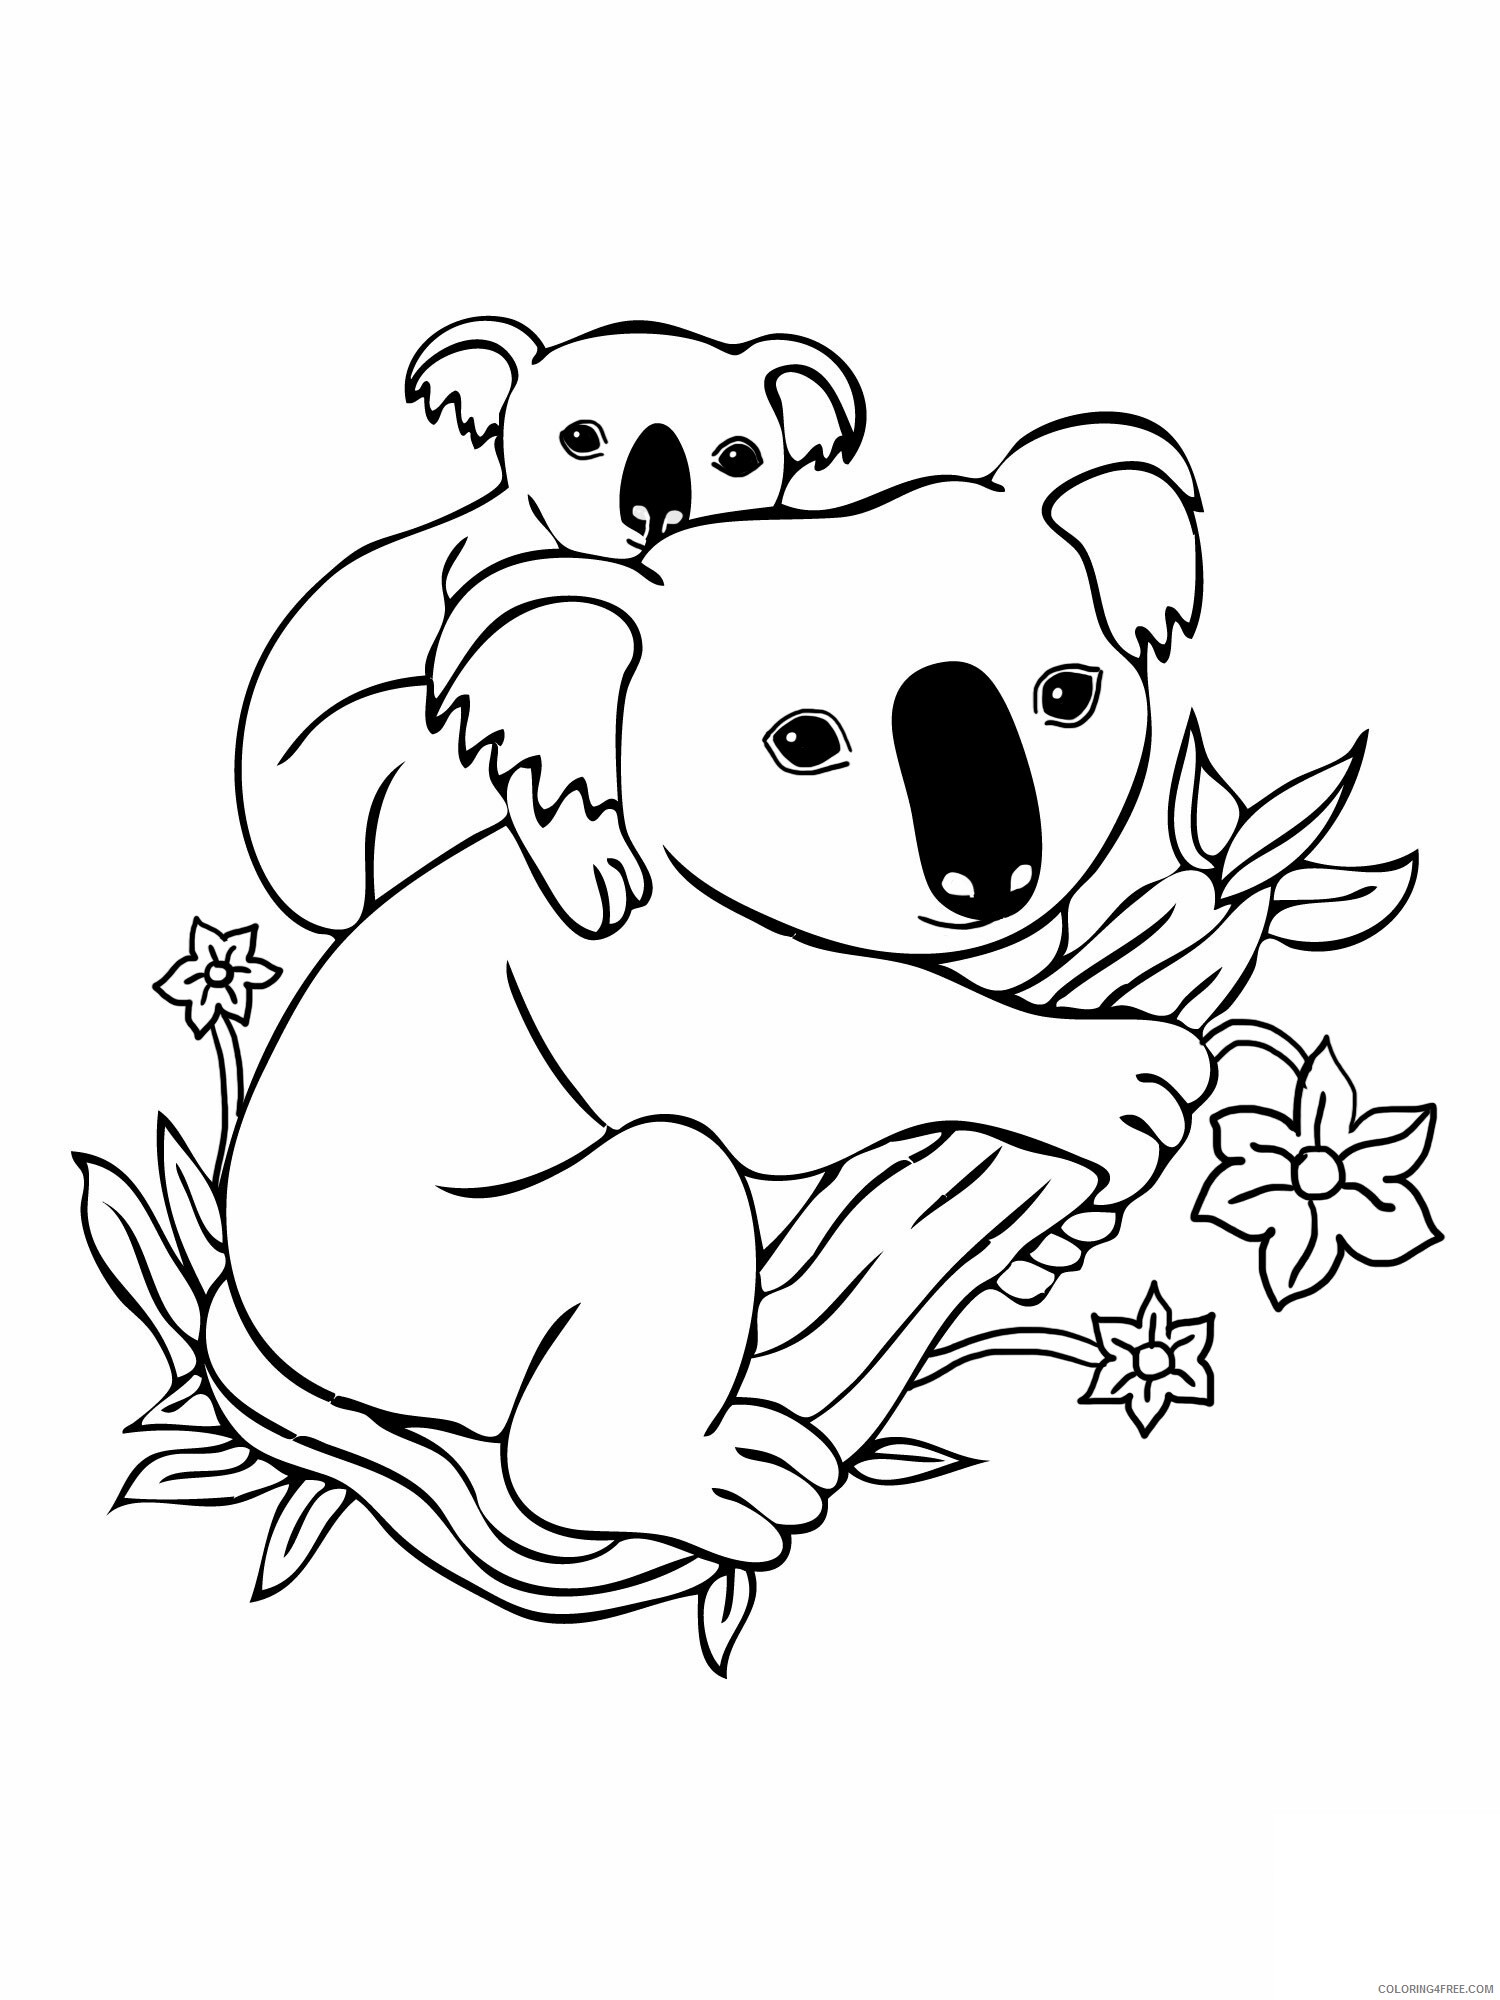 Koala Coloring Pages Animal Printable Sheets Baby and Mother Koala 2021 3032 Coloring4free